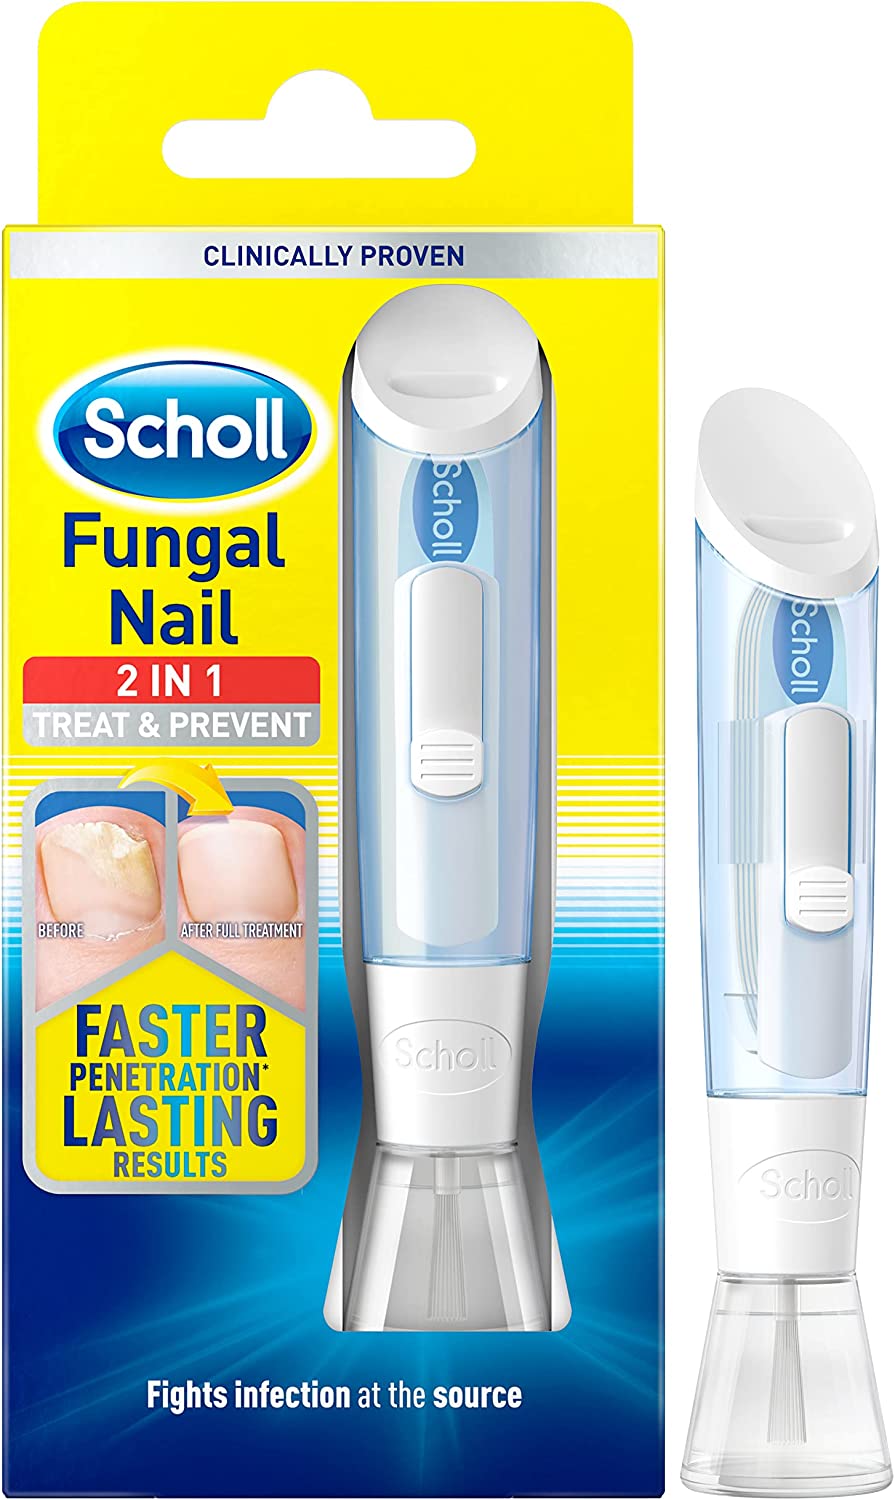 Fungal nail problems - MyDr.com.au